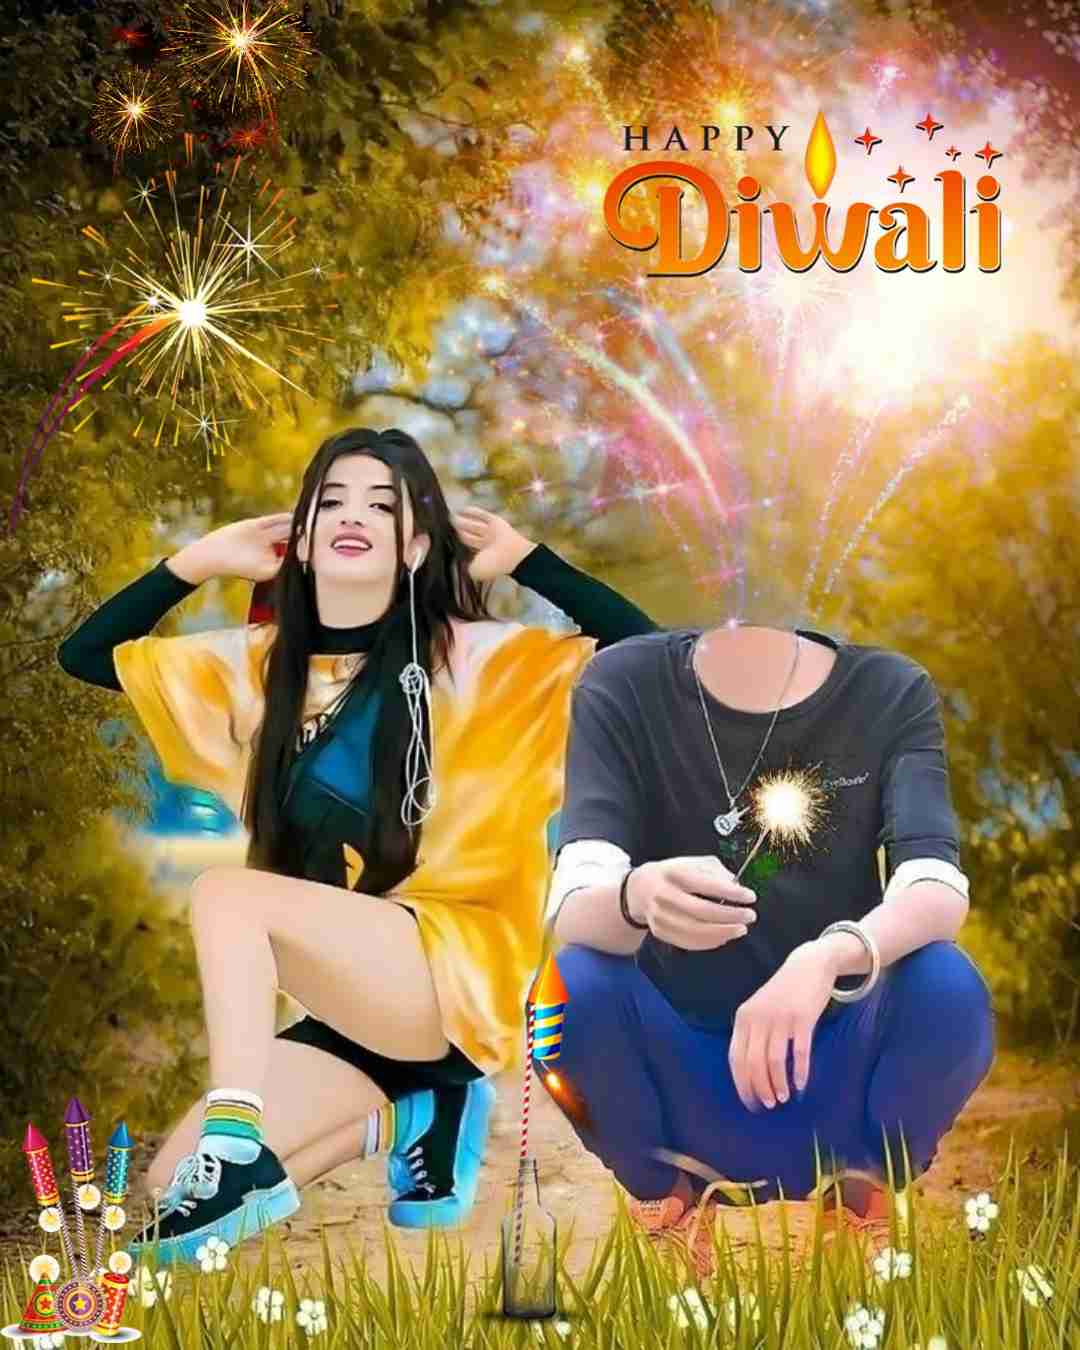 Happy Diwali hd editing background with girl 4k